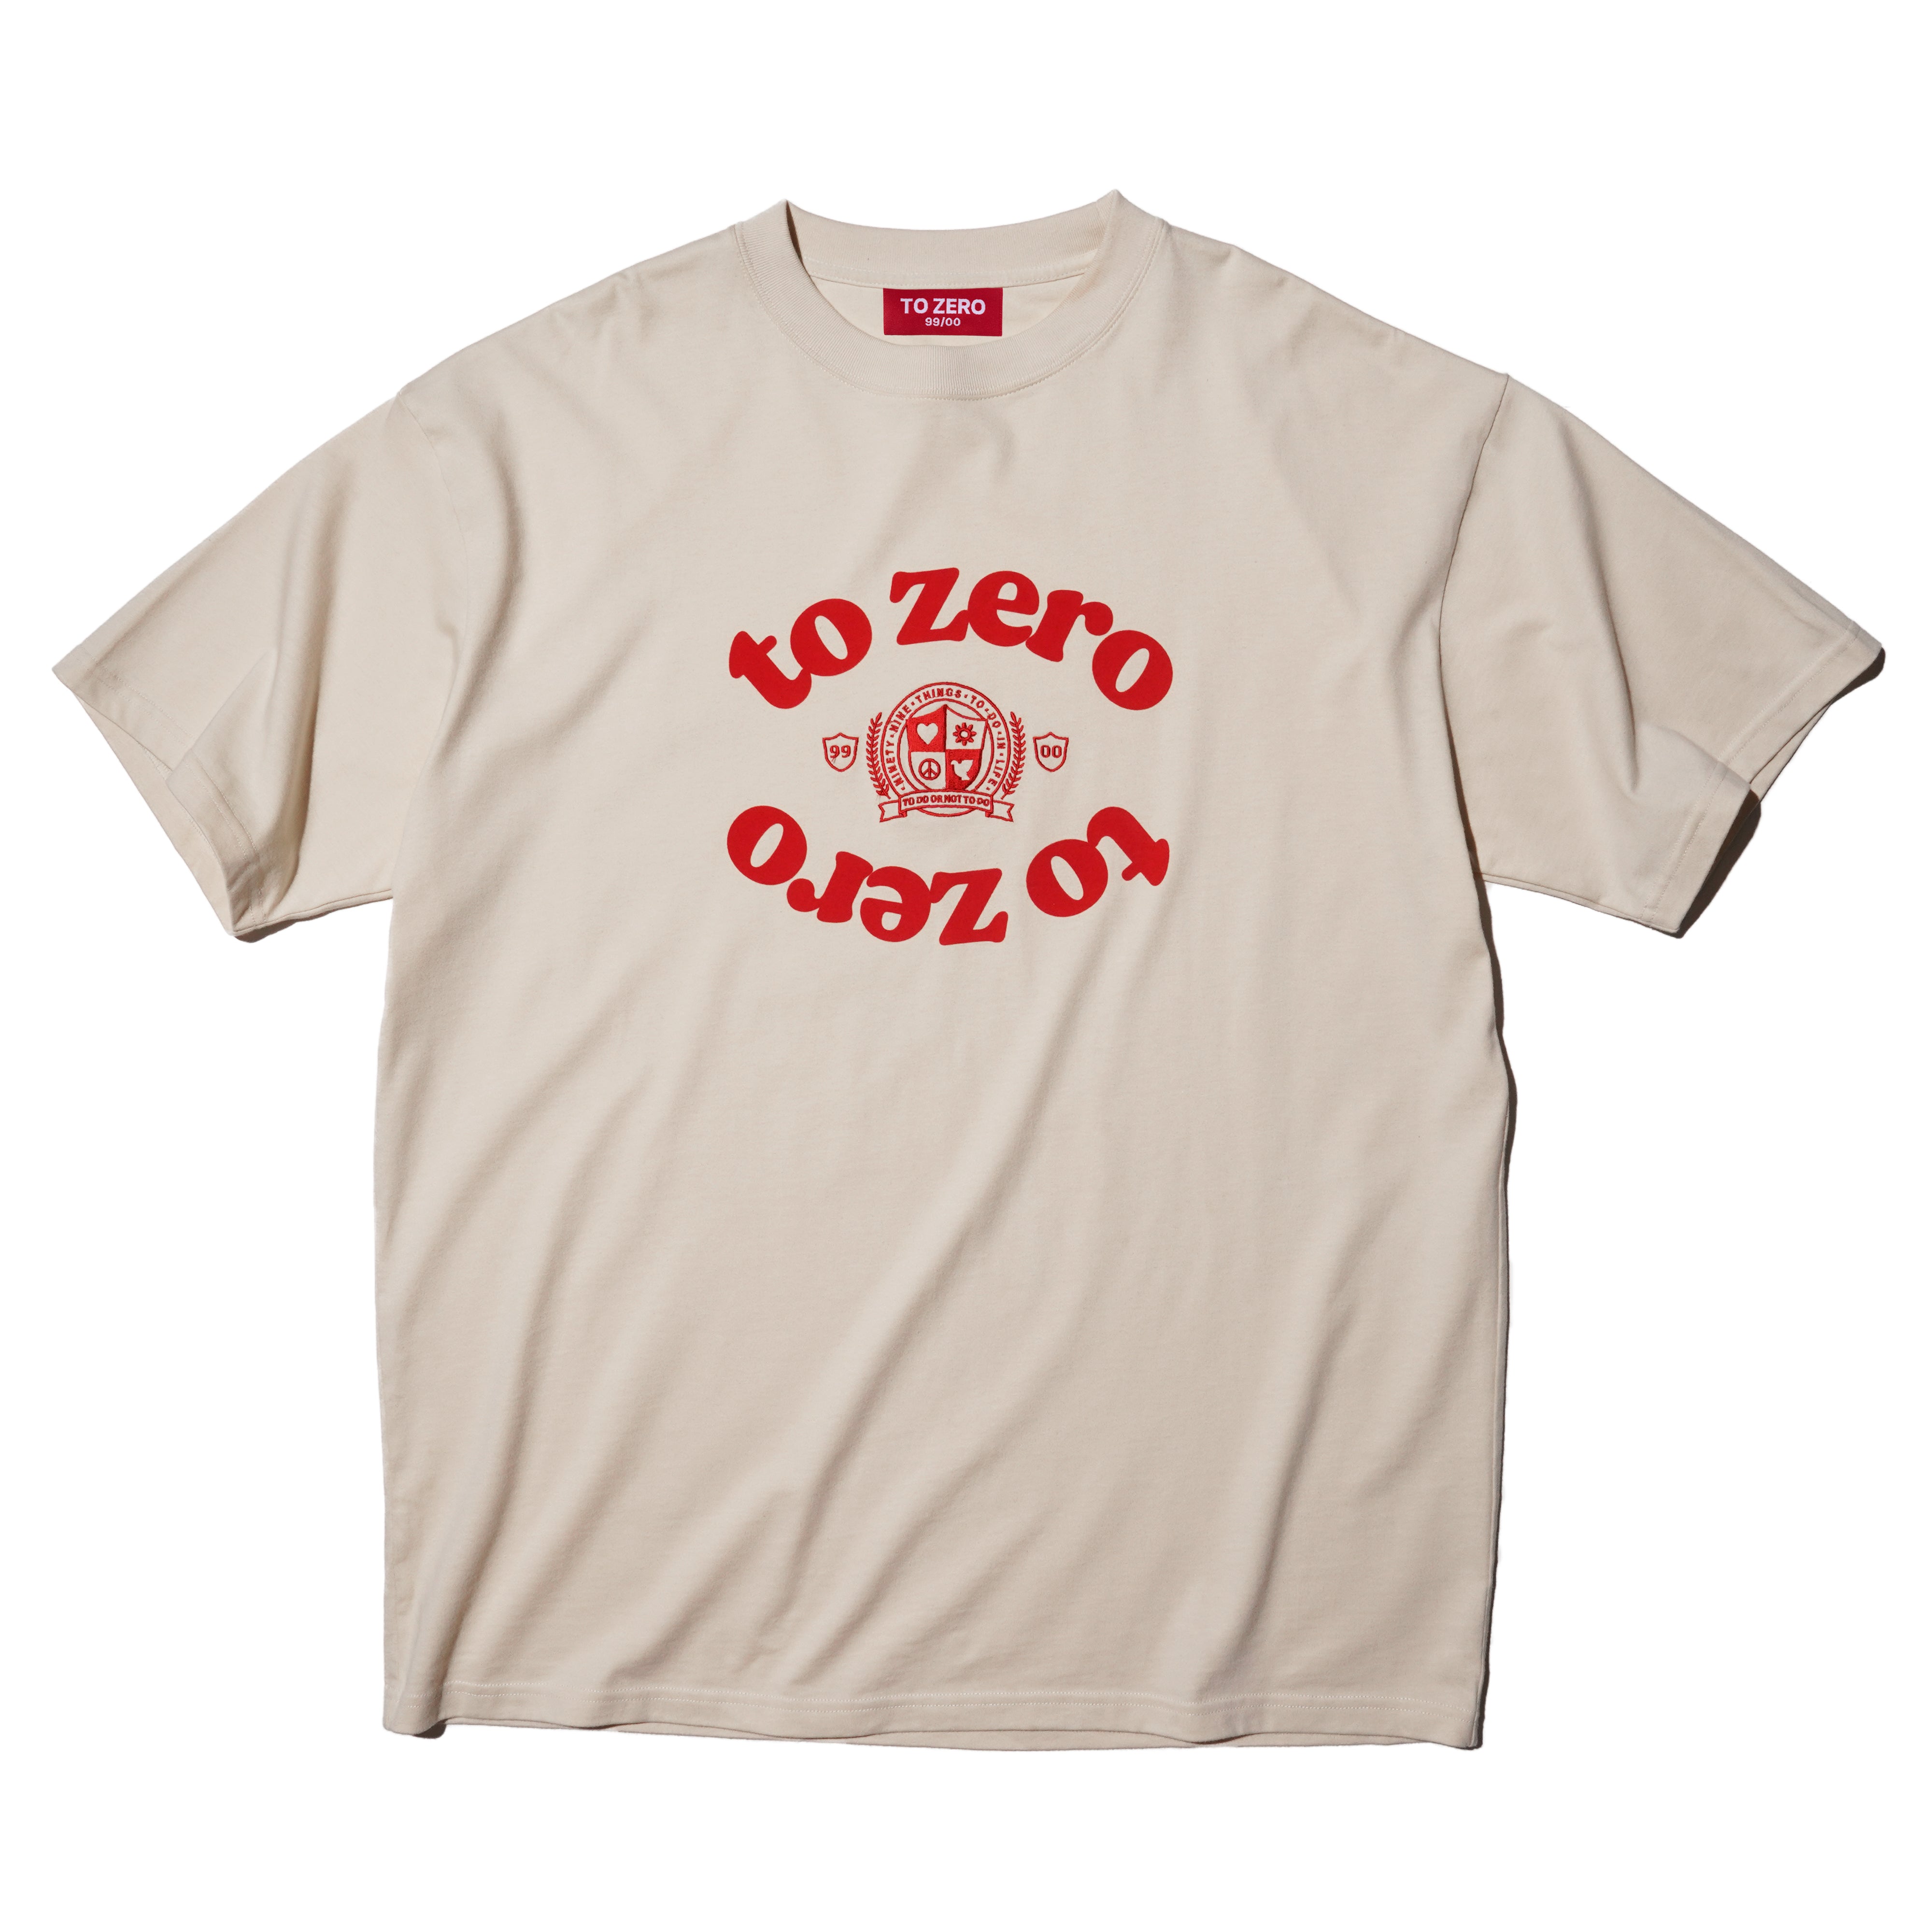 'TO ZERO COLLEGE BADGE' Flocking Print T-Shirt (NAVY)